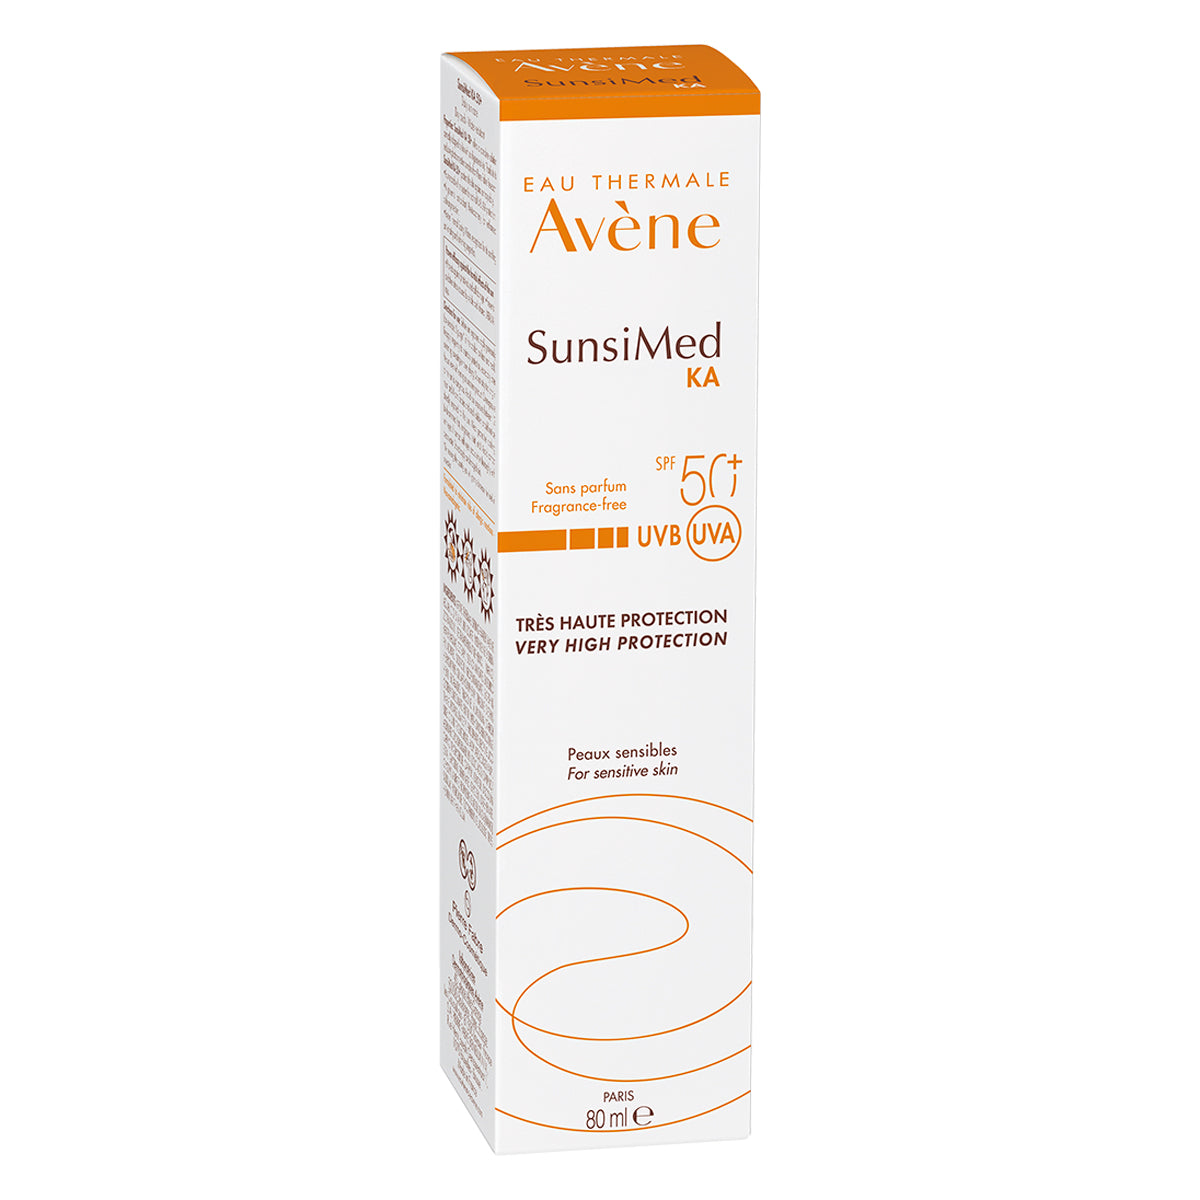 Avene Sunsimed solar, protección solar muy alta adaptada a las pieles de riesgo 80ml.